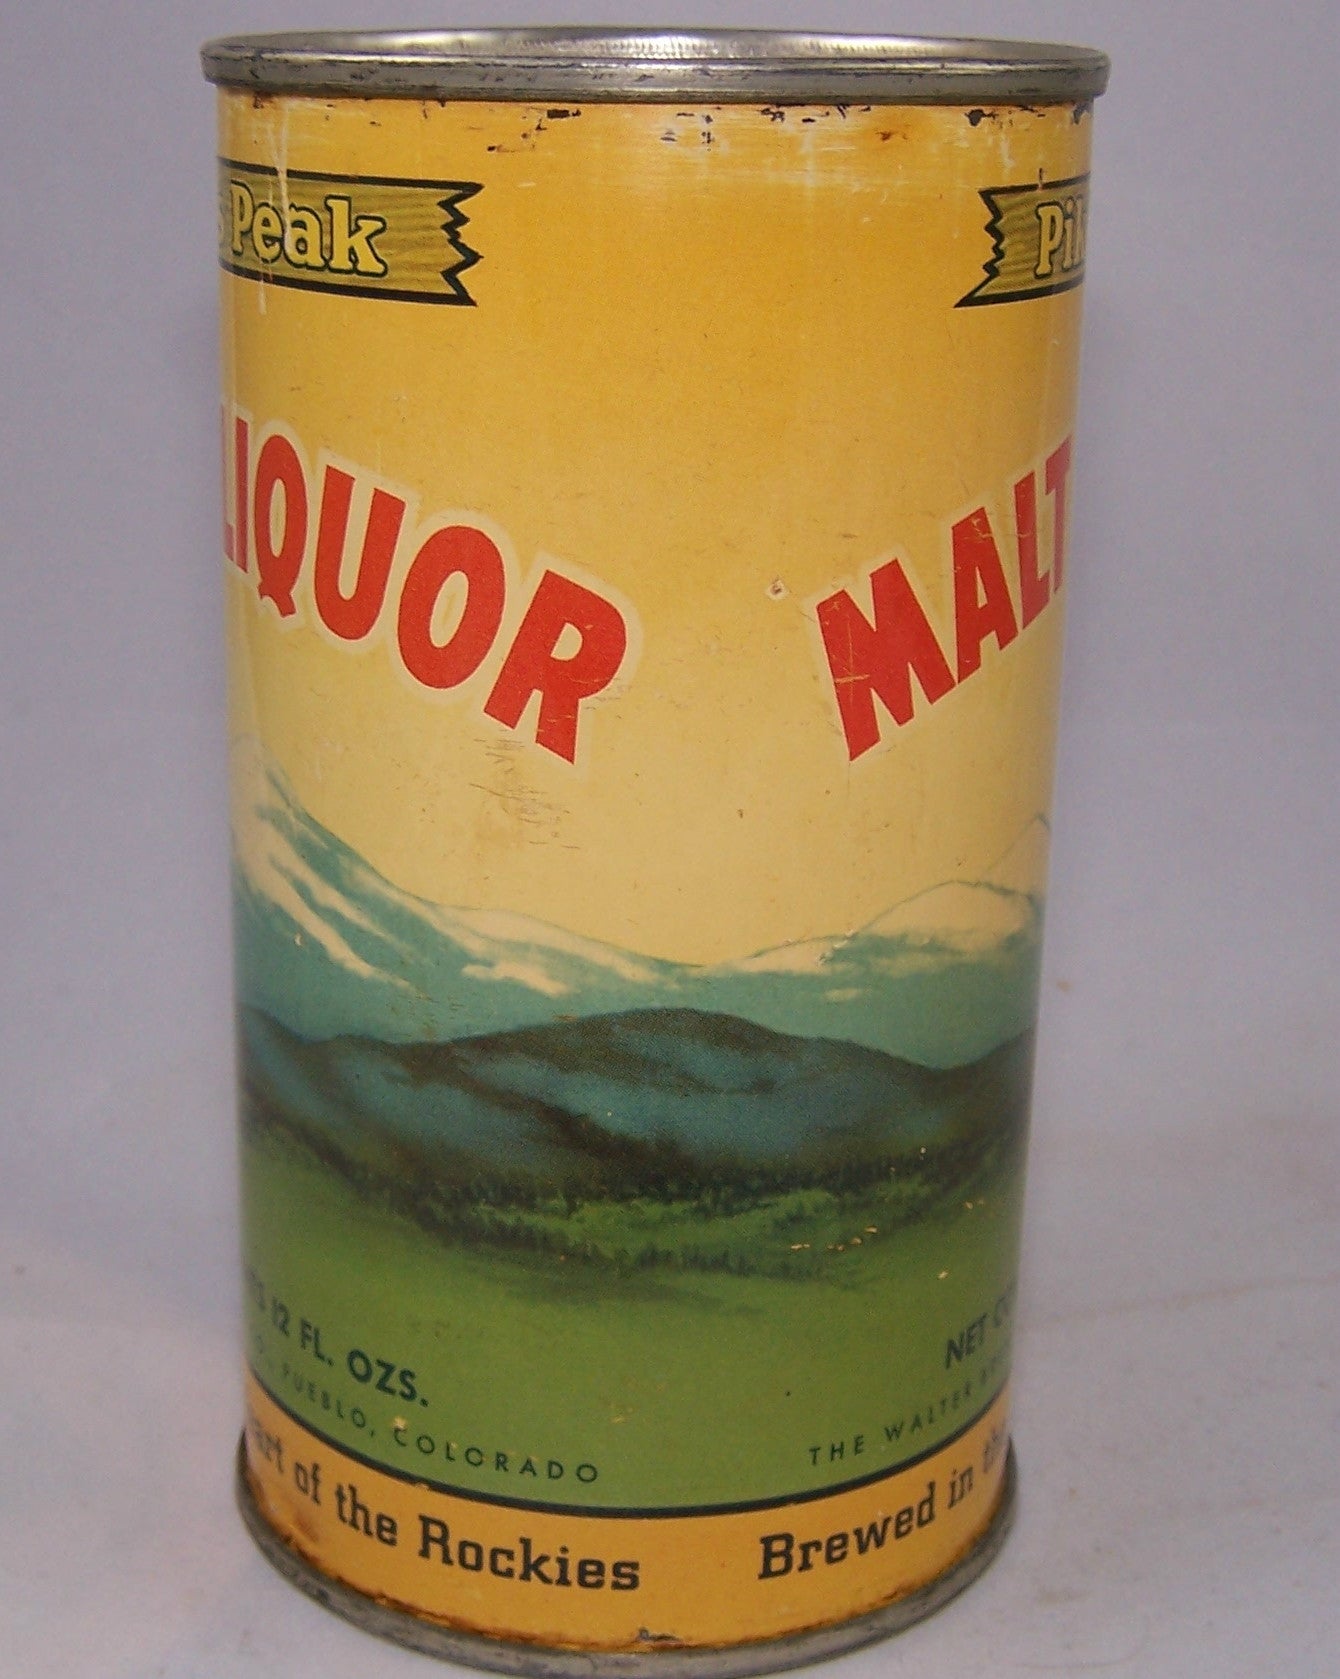 Pikes Peak Malt Liquor, USBC 115-32, Grade 1- sold on 11/22/15